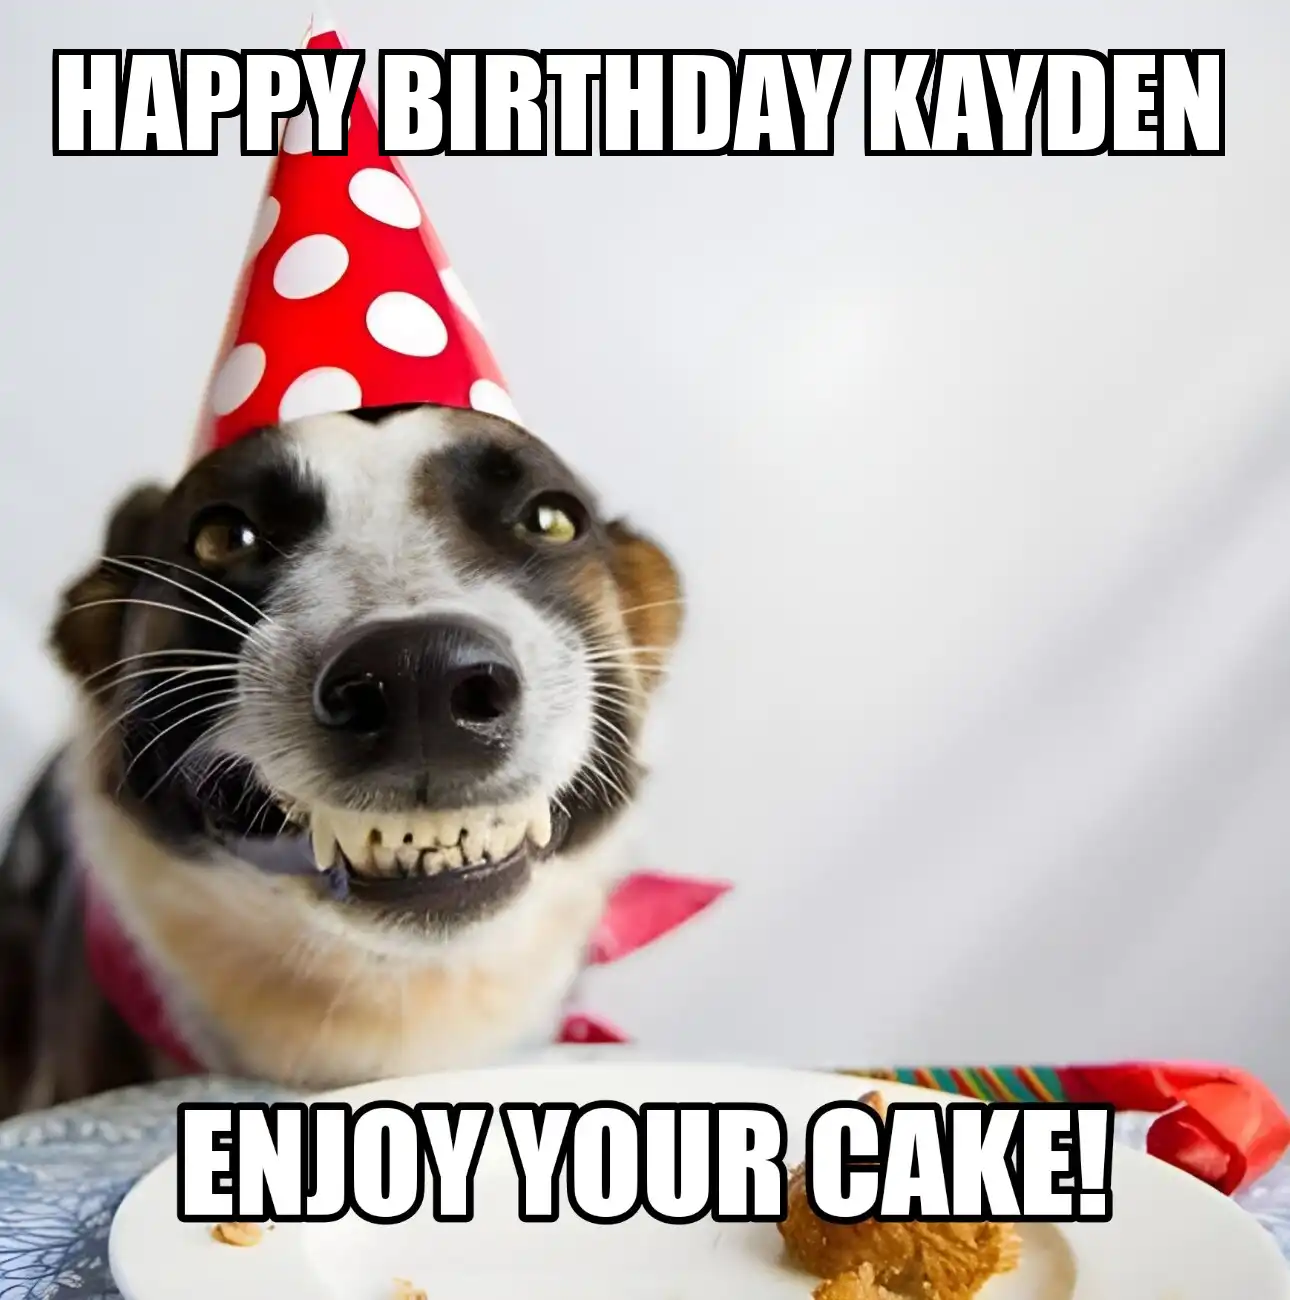 Happy Birthday Kayden Enjoy Your Cake Dog Meme